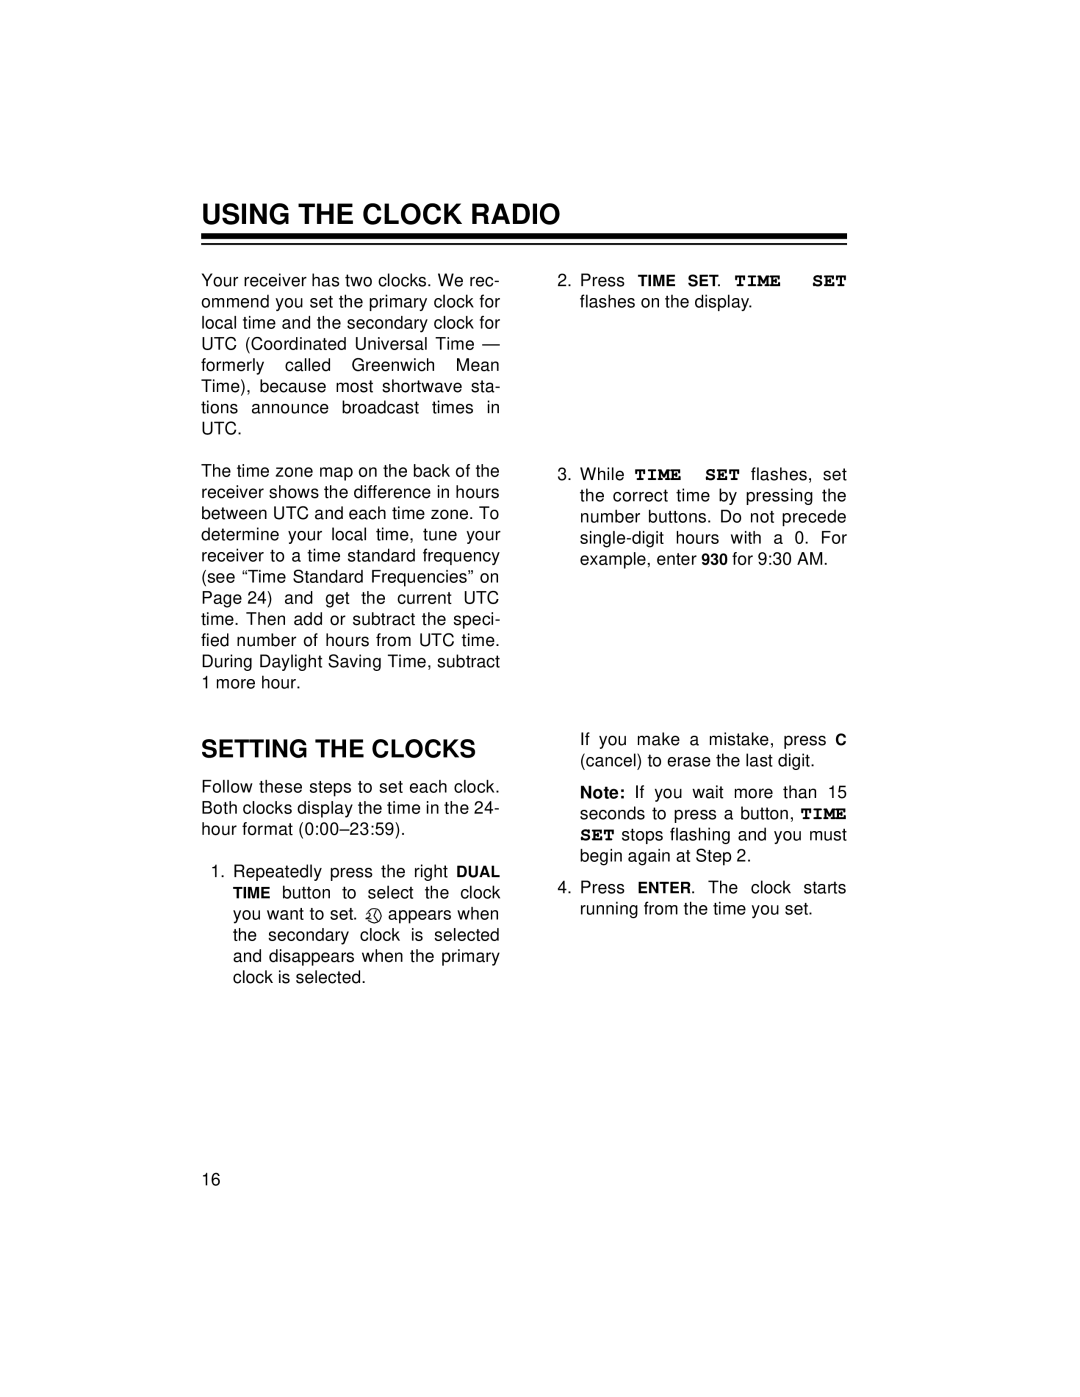 Radio Shack DX-392 owner manual Using the Clock Radio, Setting the Clocks 